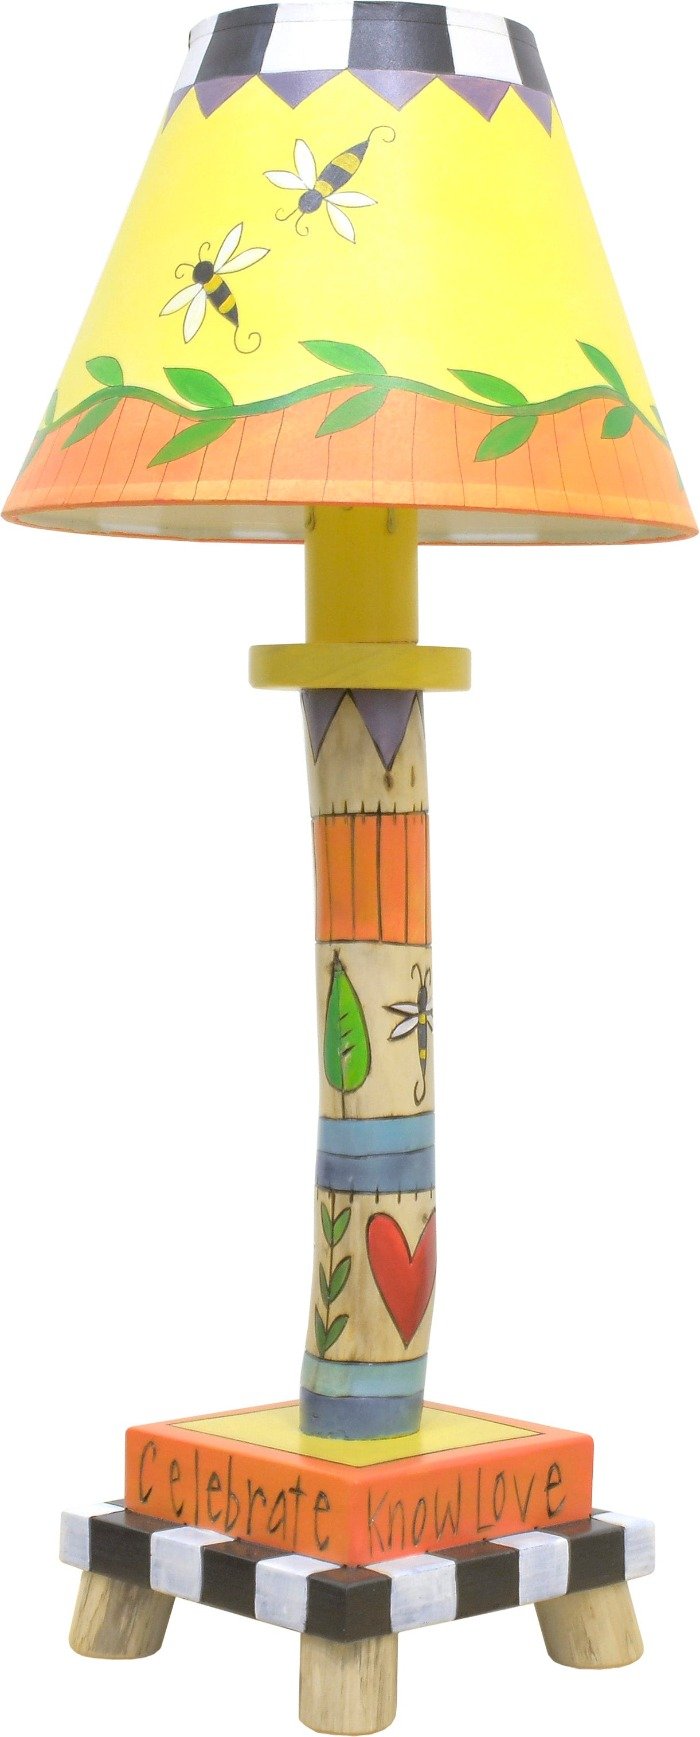 Log Candlestick Lamp